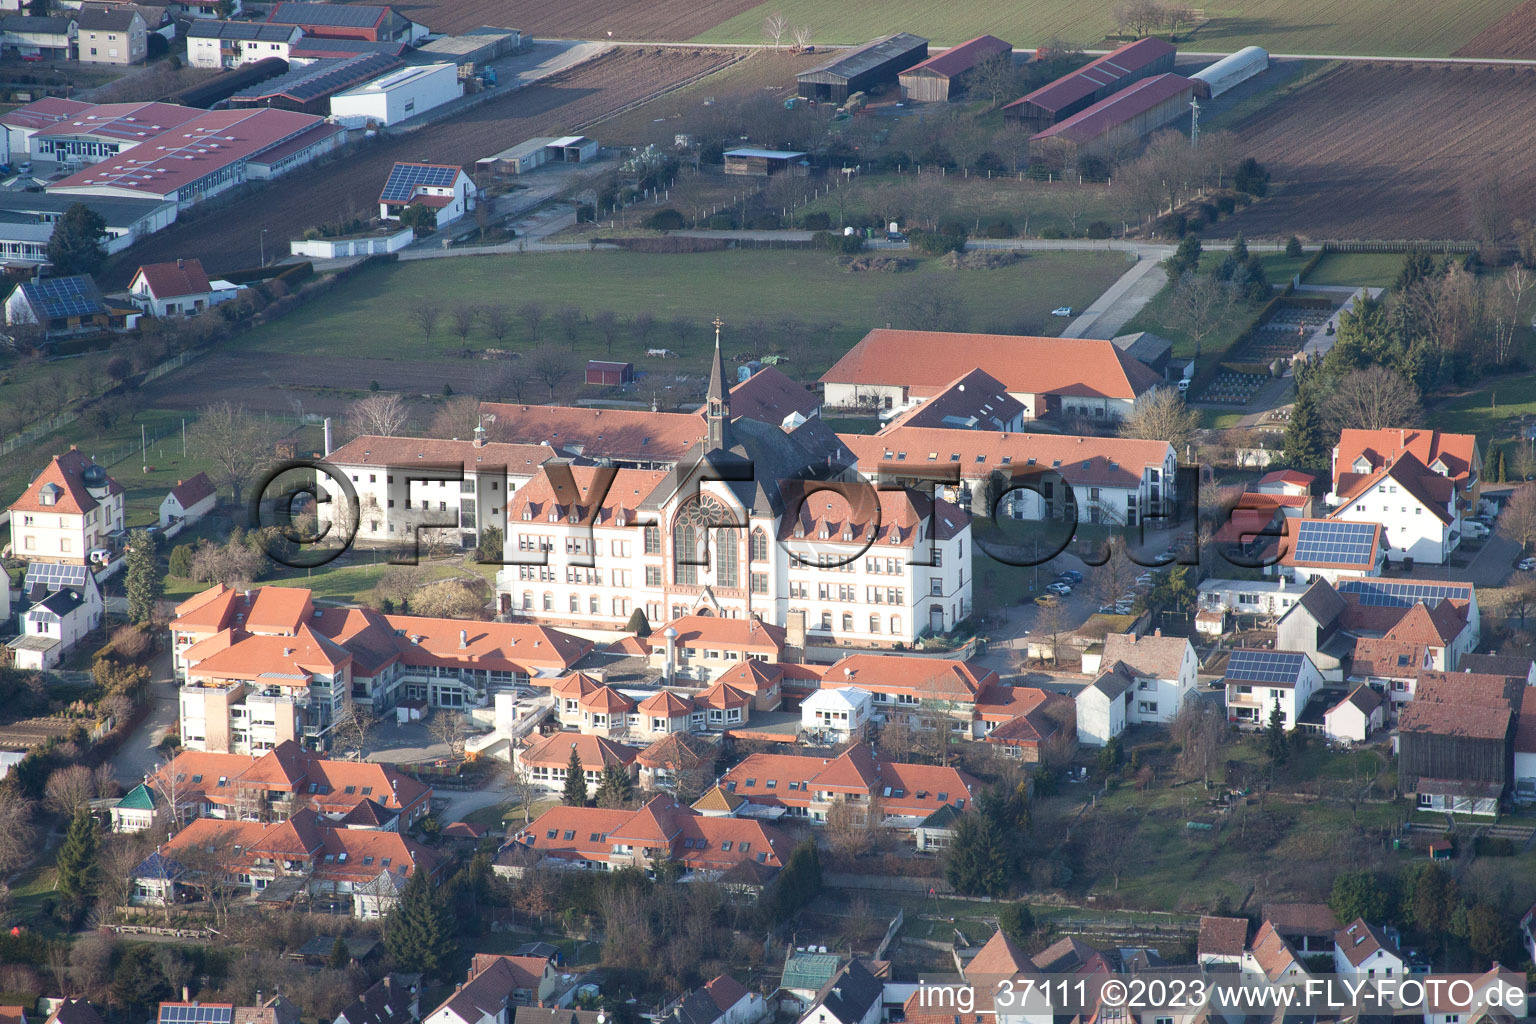 District Herxheim in Herxheim bei Landau/Pfalz in the state Rhineland-Palatinate, Germany from the drone perspective